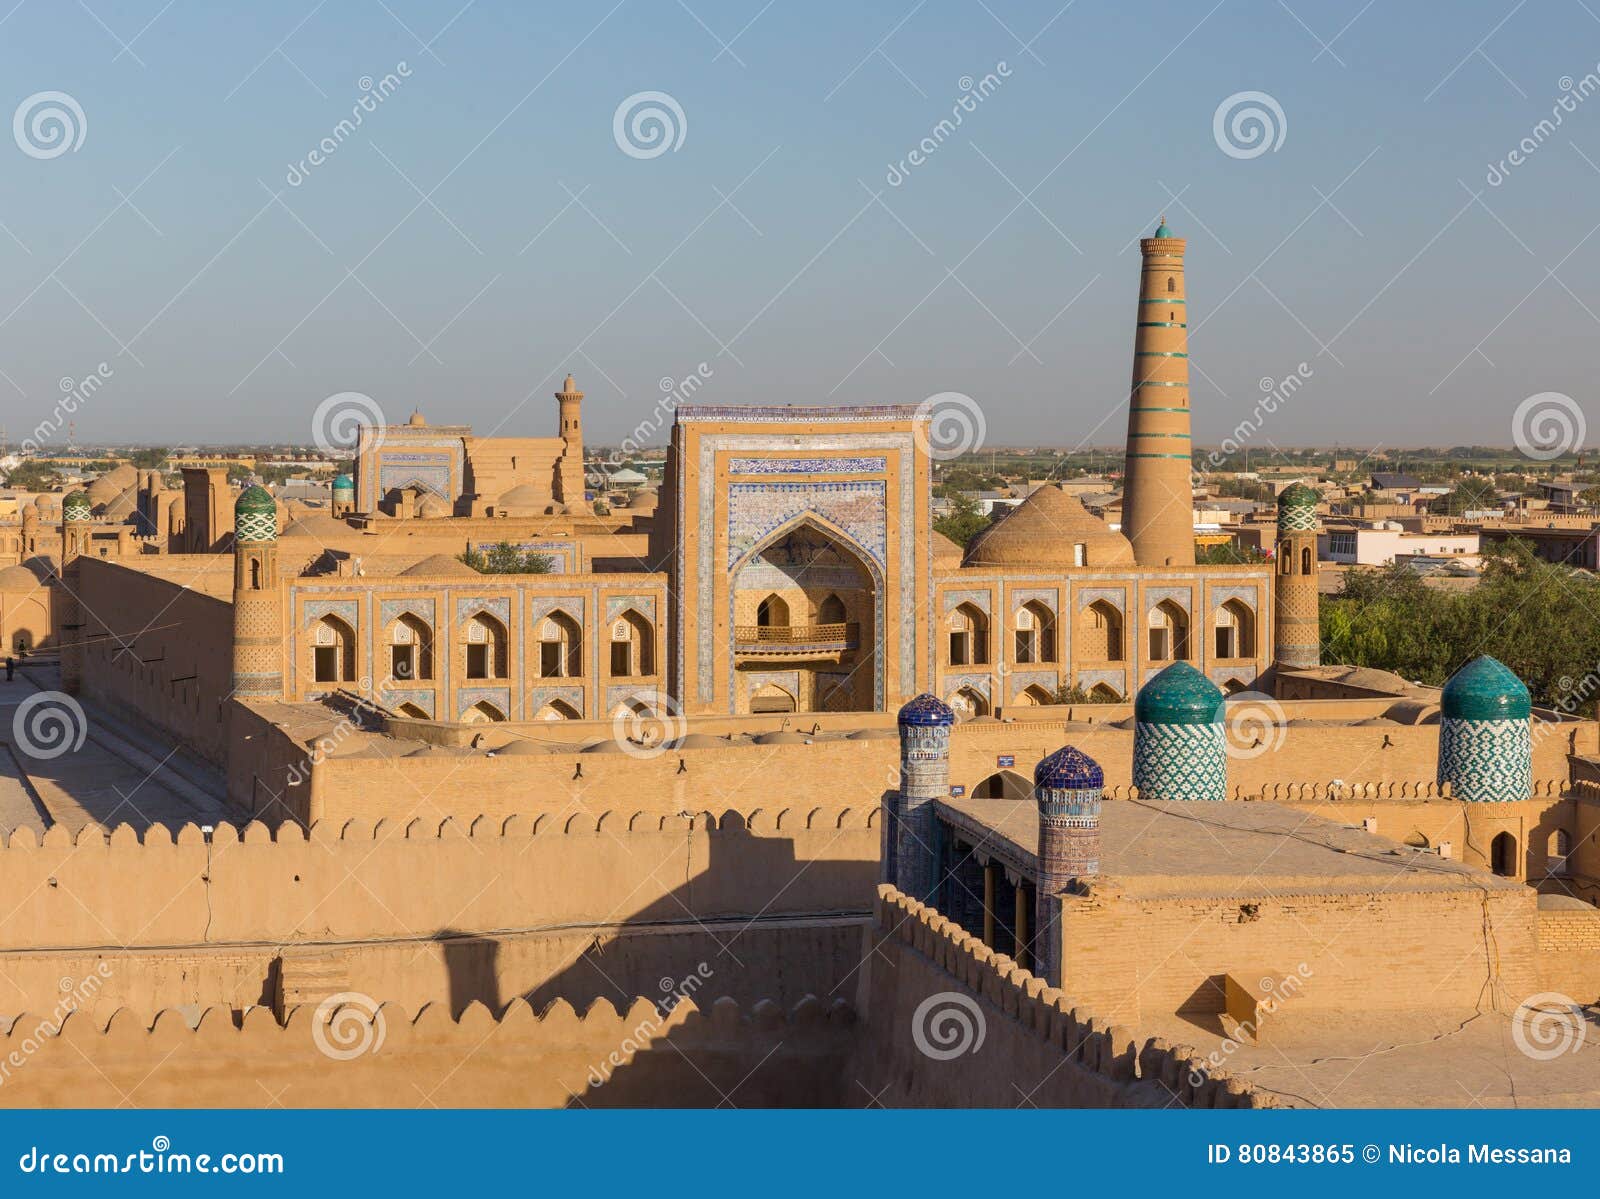 view of ichon-qala, the old town of khiva, uzbekistan.